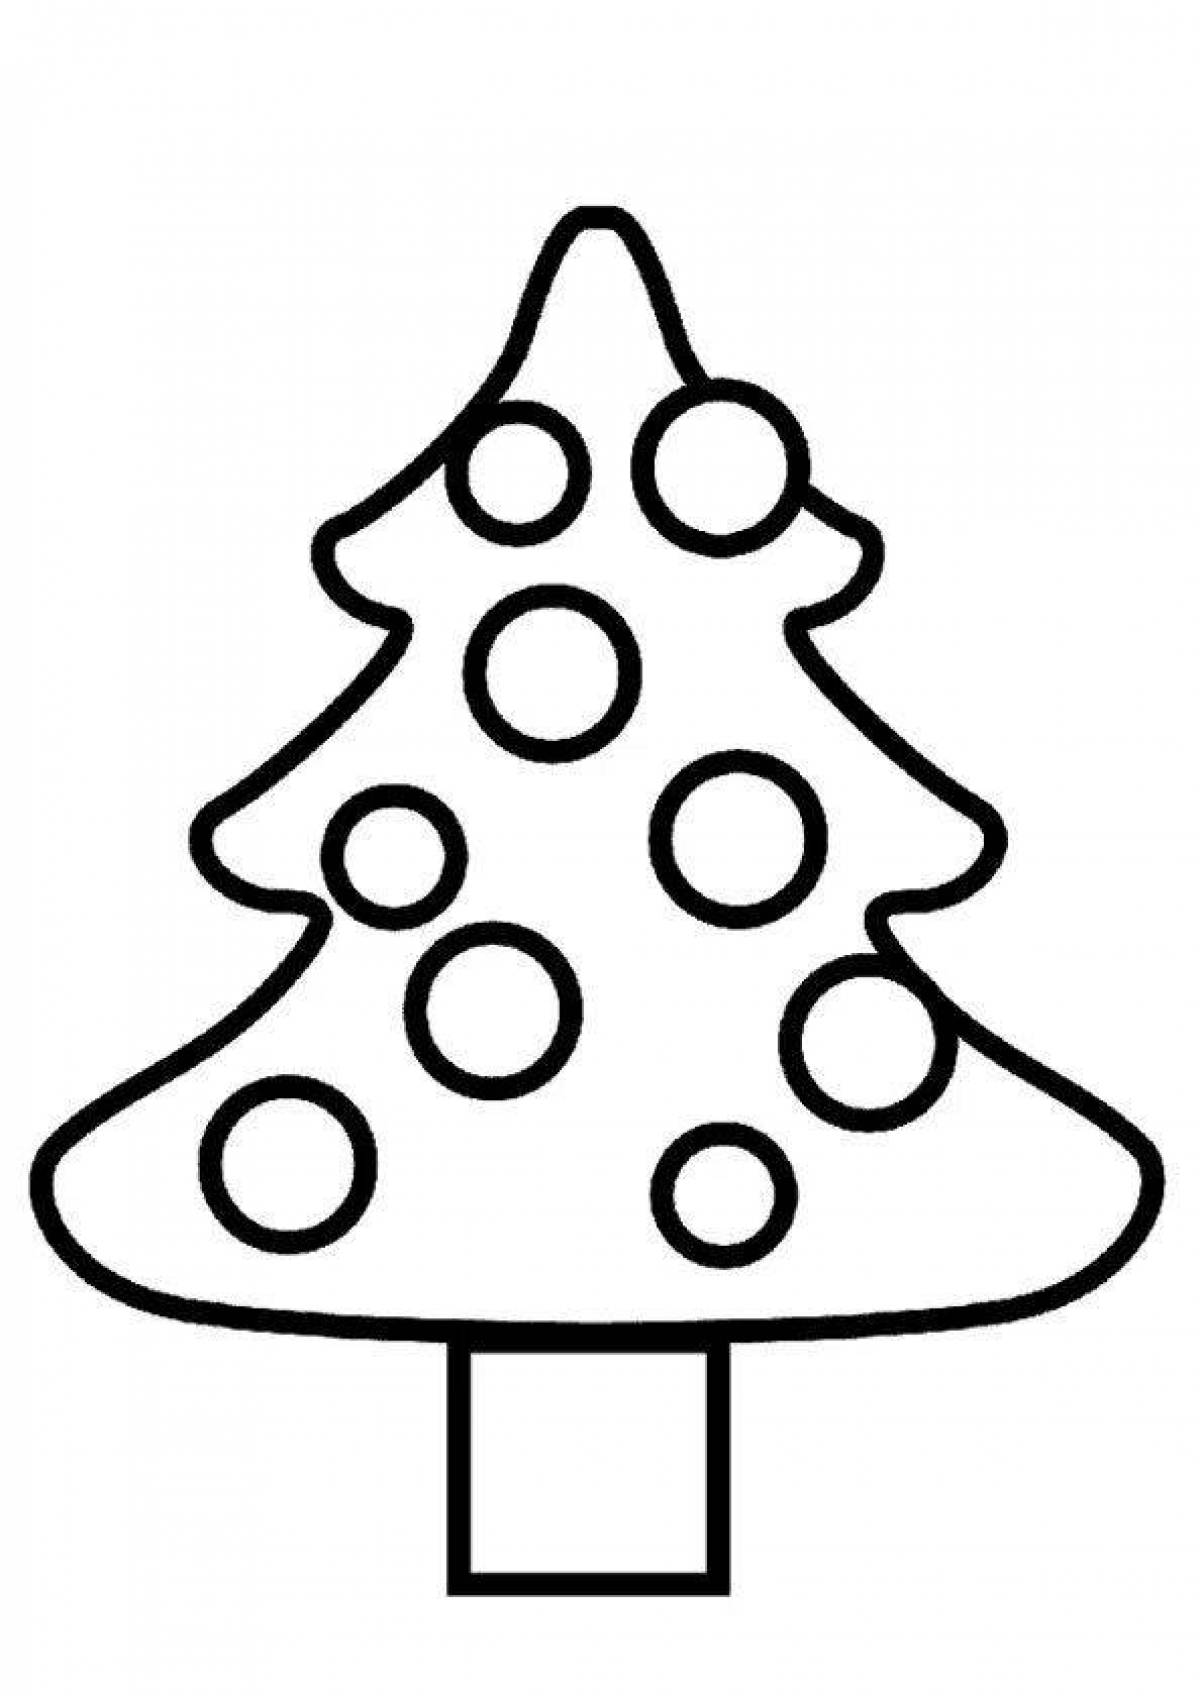 Exuberant Christmas tree with balls